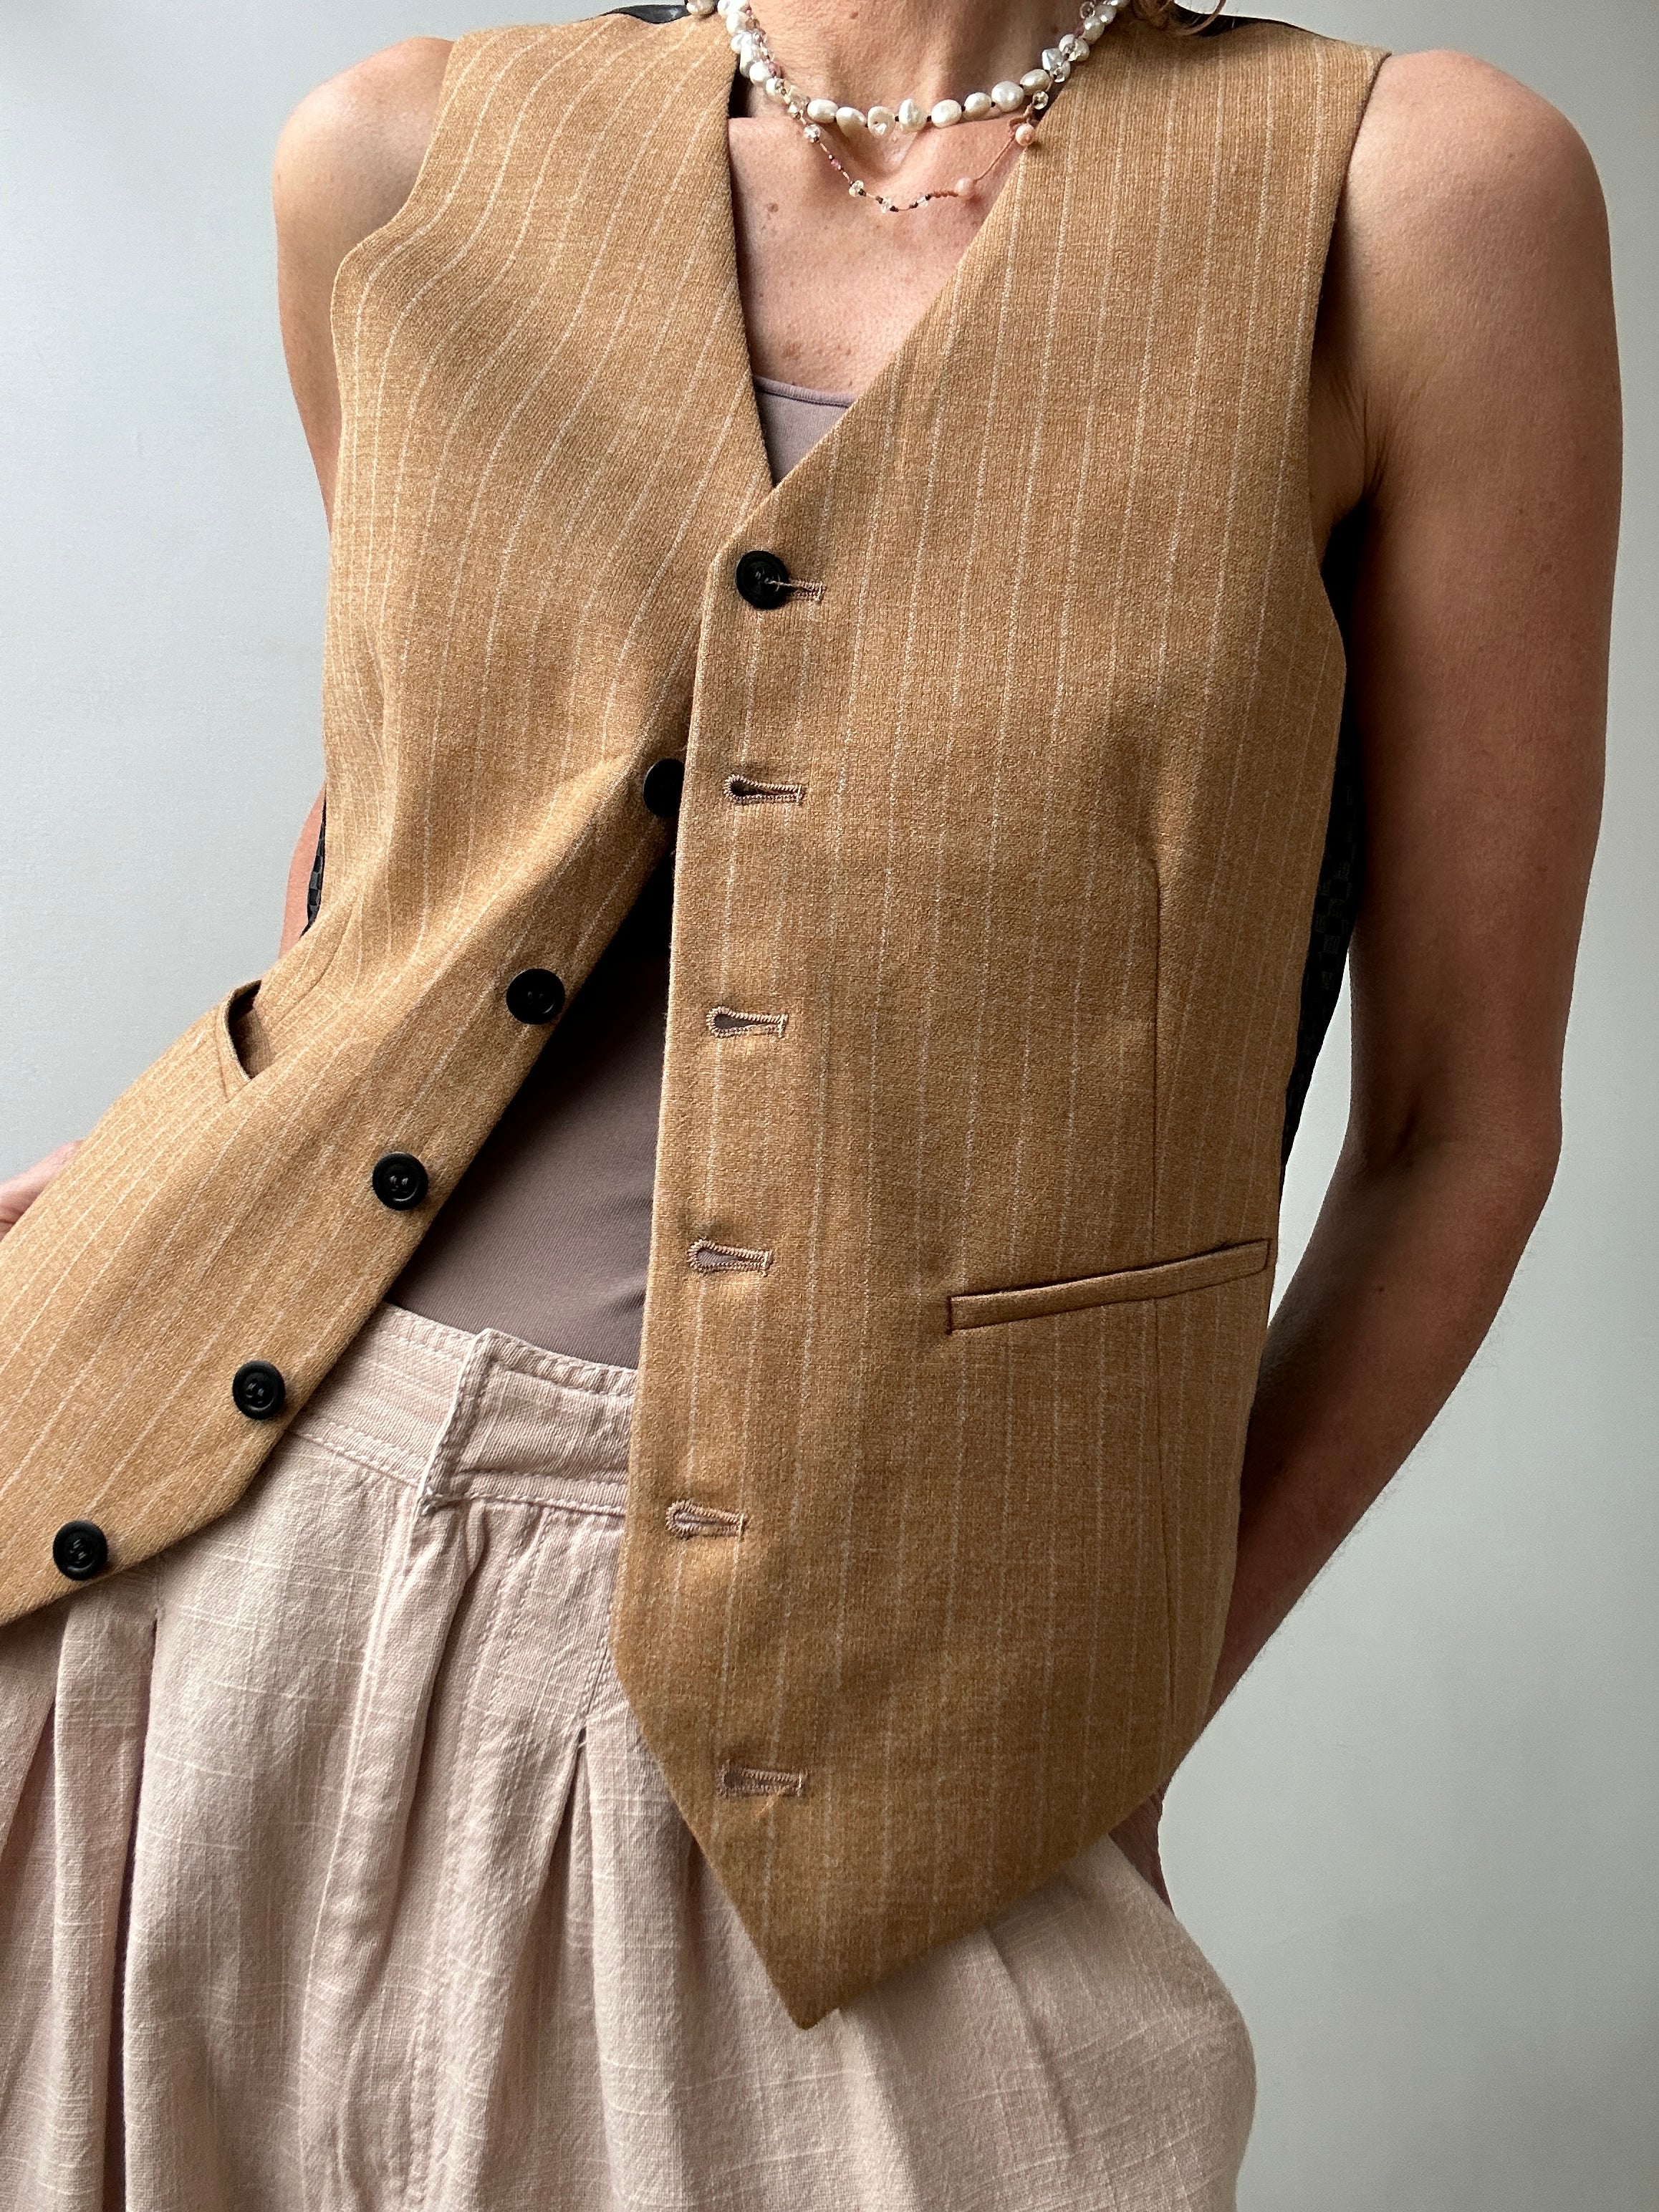 Future Nomads Vests Small-Medium Vintage Suit Vest Gold Stripe